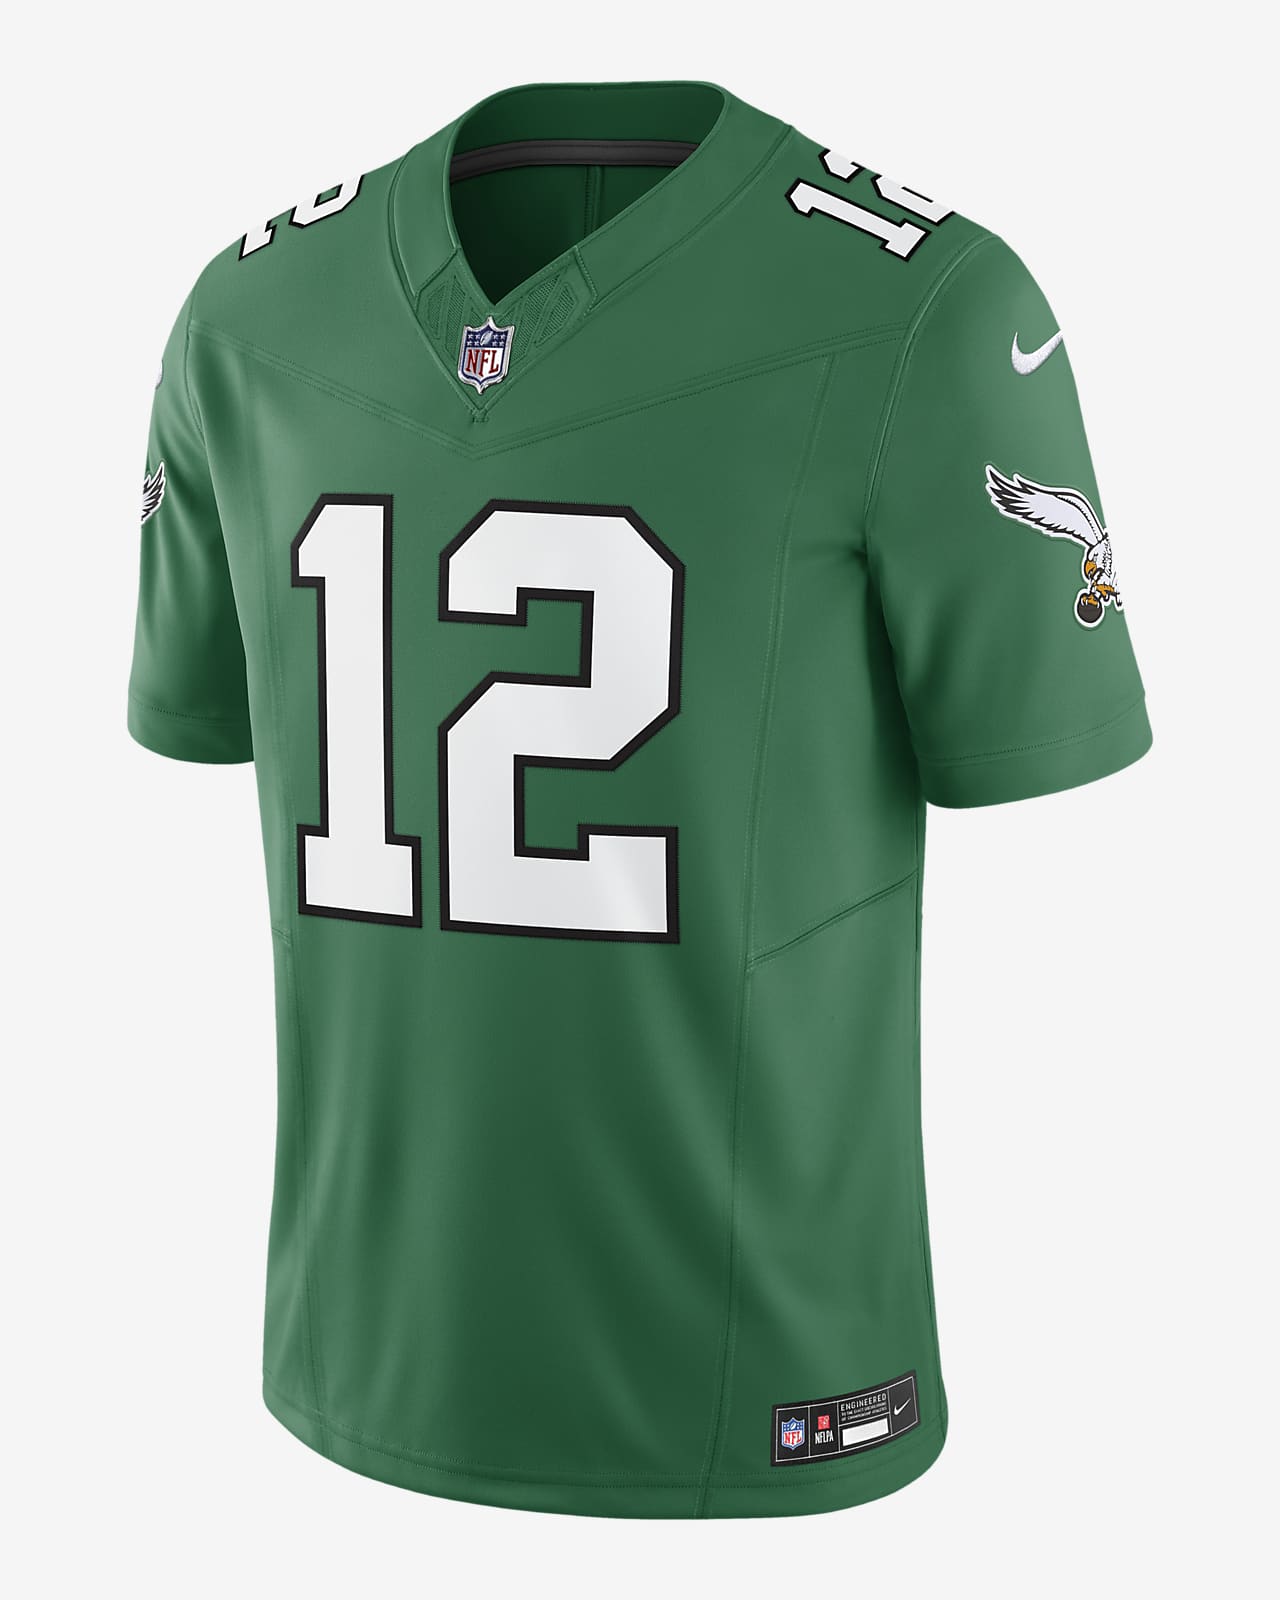 Jersey de fútbol americano Nike Dri-FIT de la NFL Limited para hombre Randall Cunningham Philadelphia Eagles